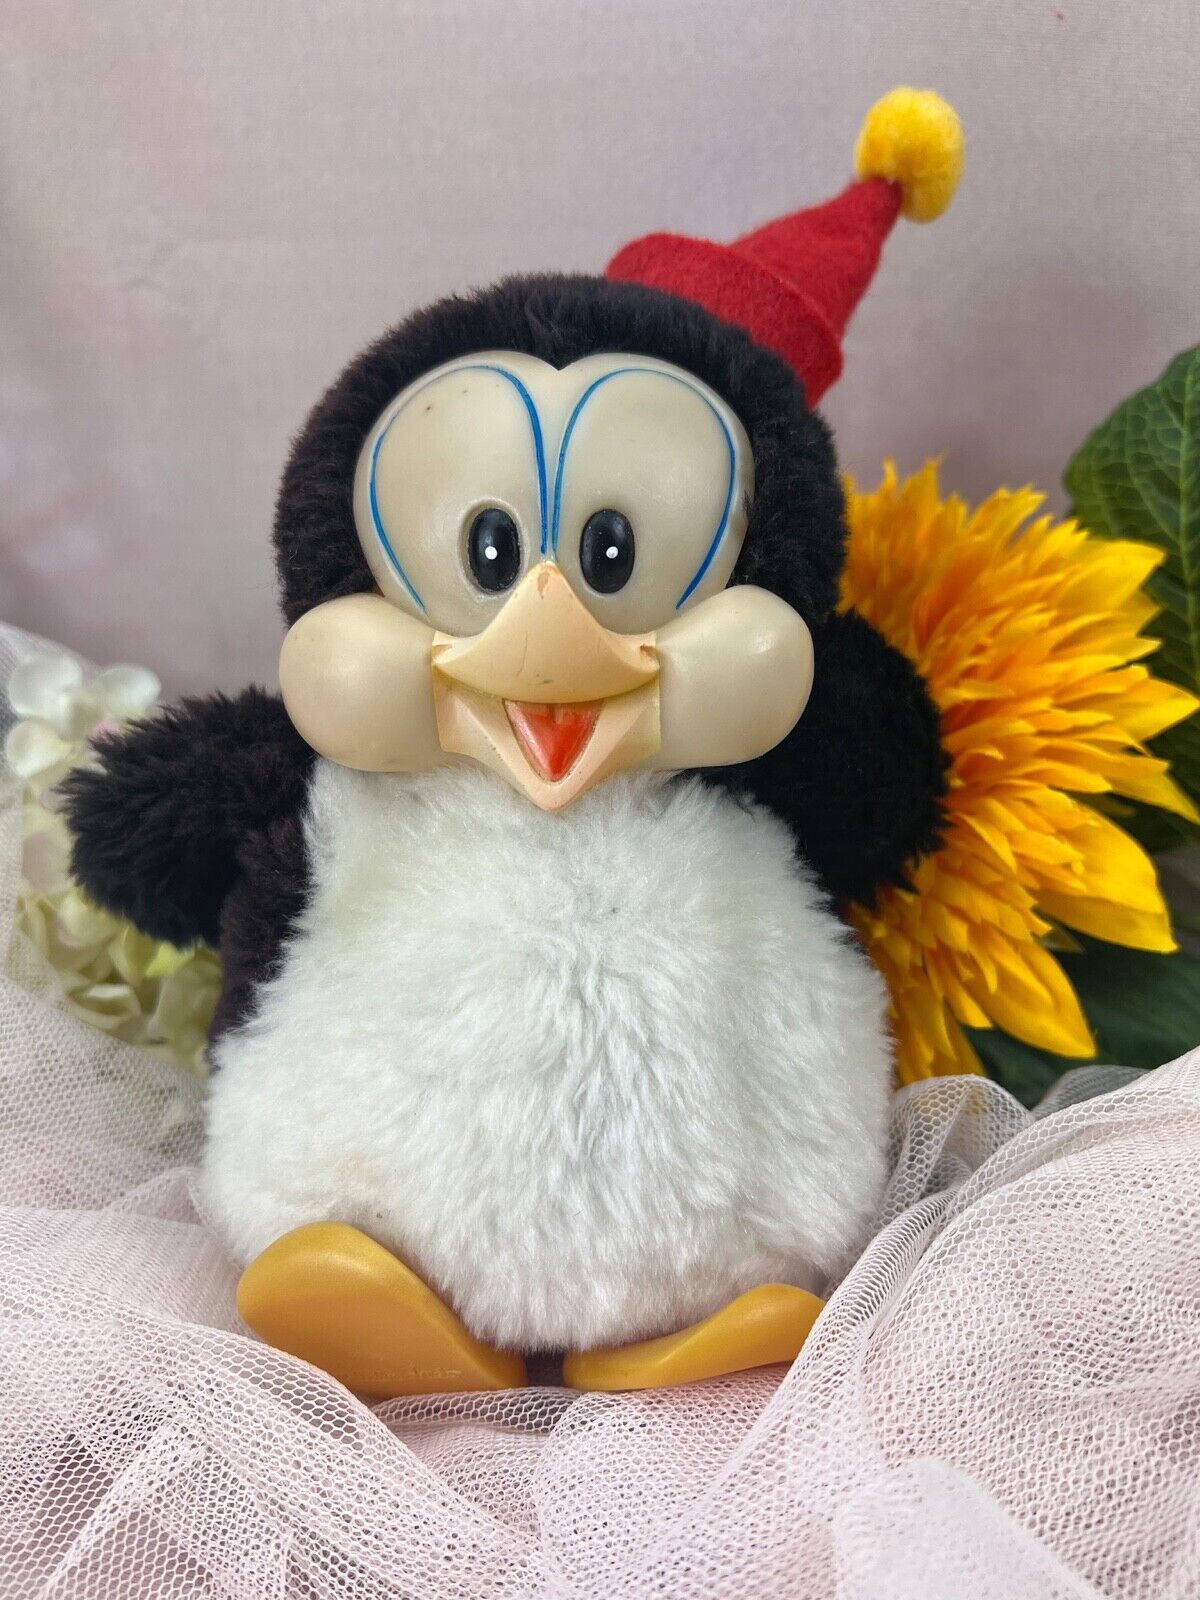 1982 Walter Lantz CHILLY WILLY Penguin Plush Stuffed Animal Rubber Face/Feet